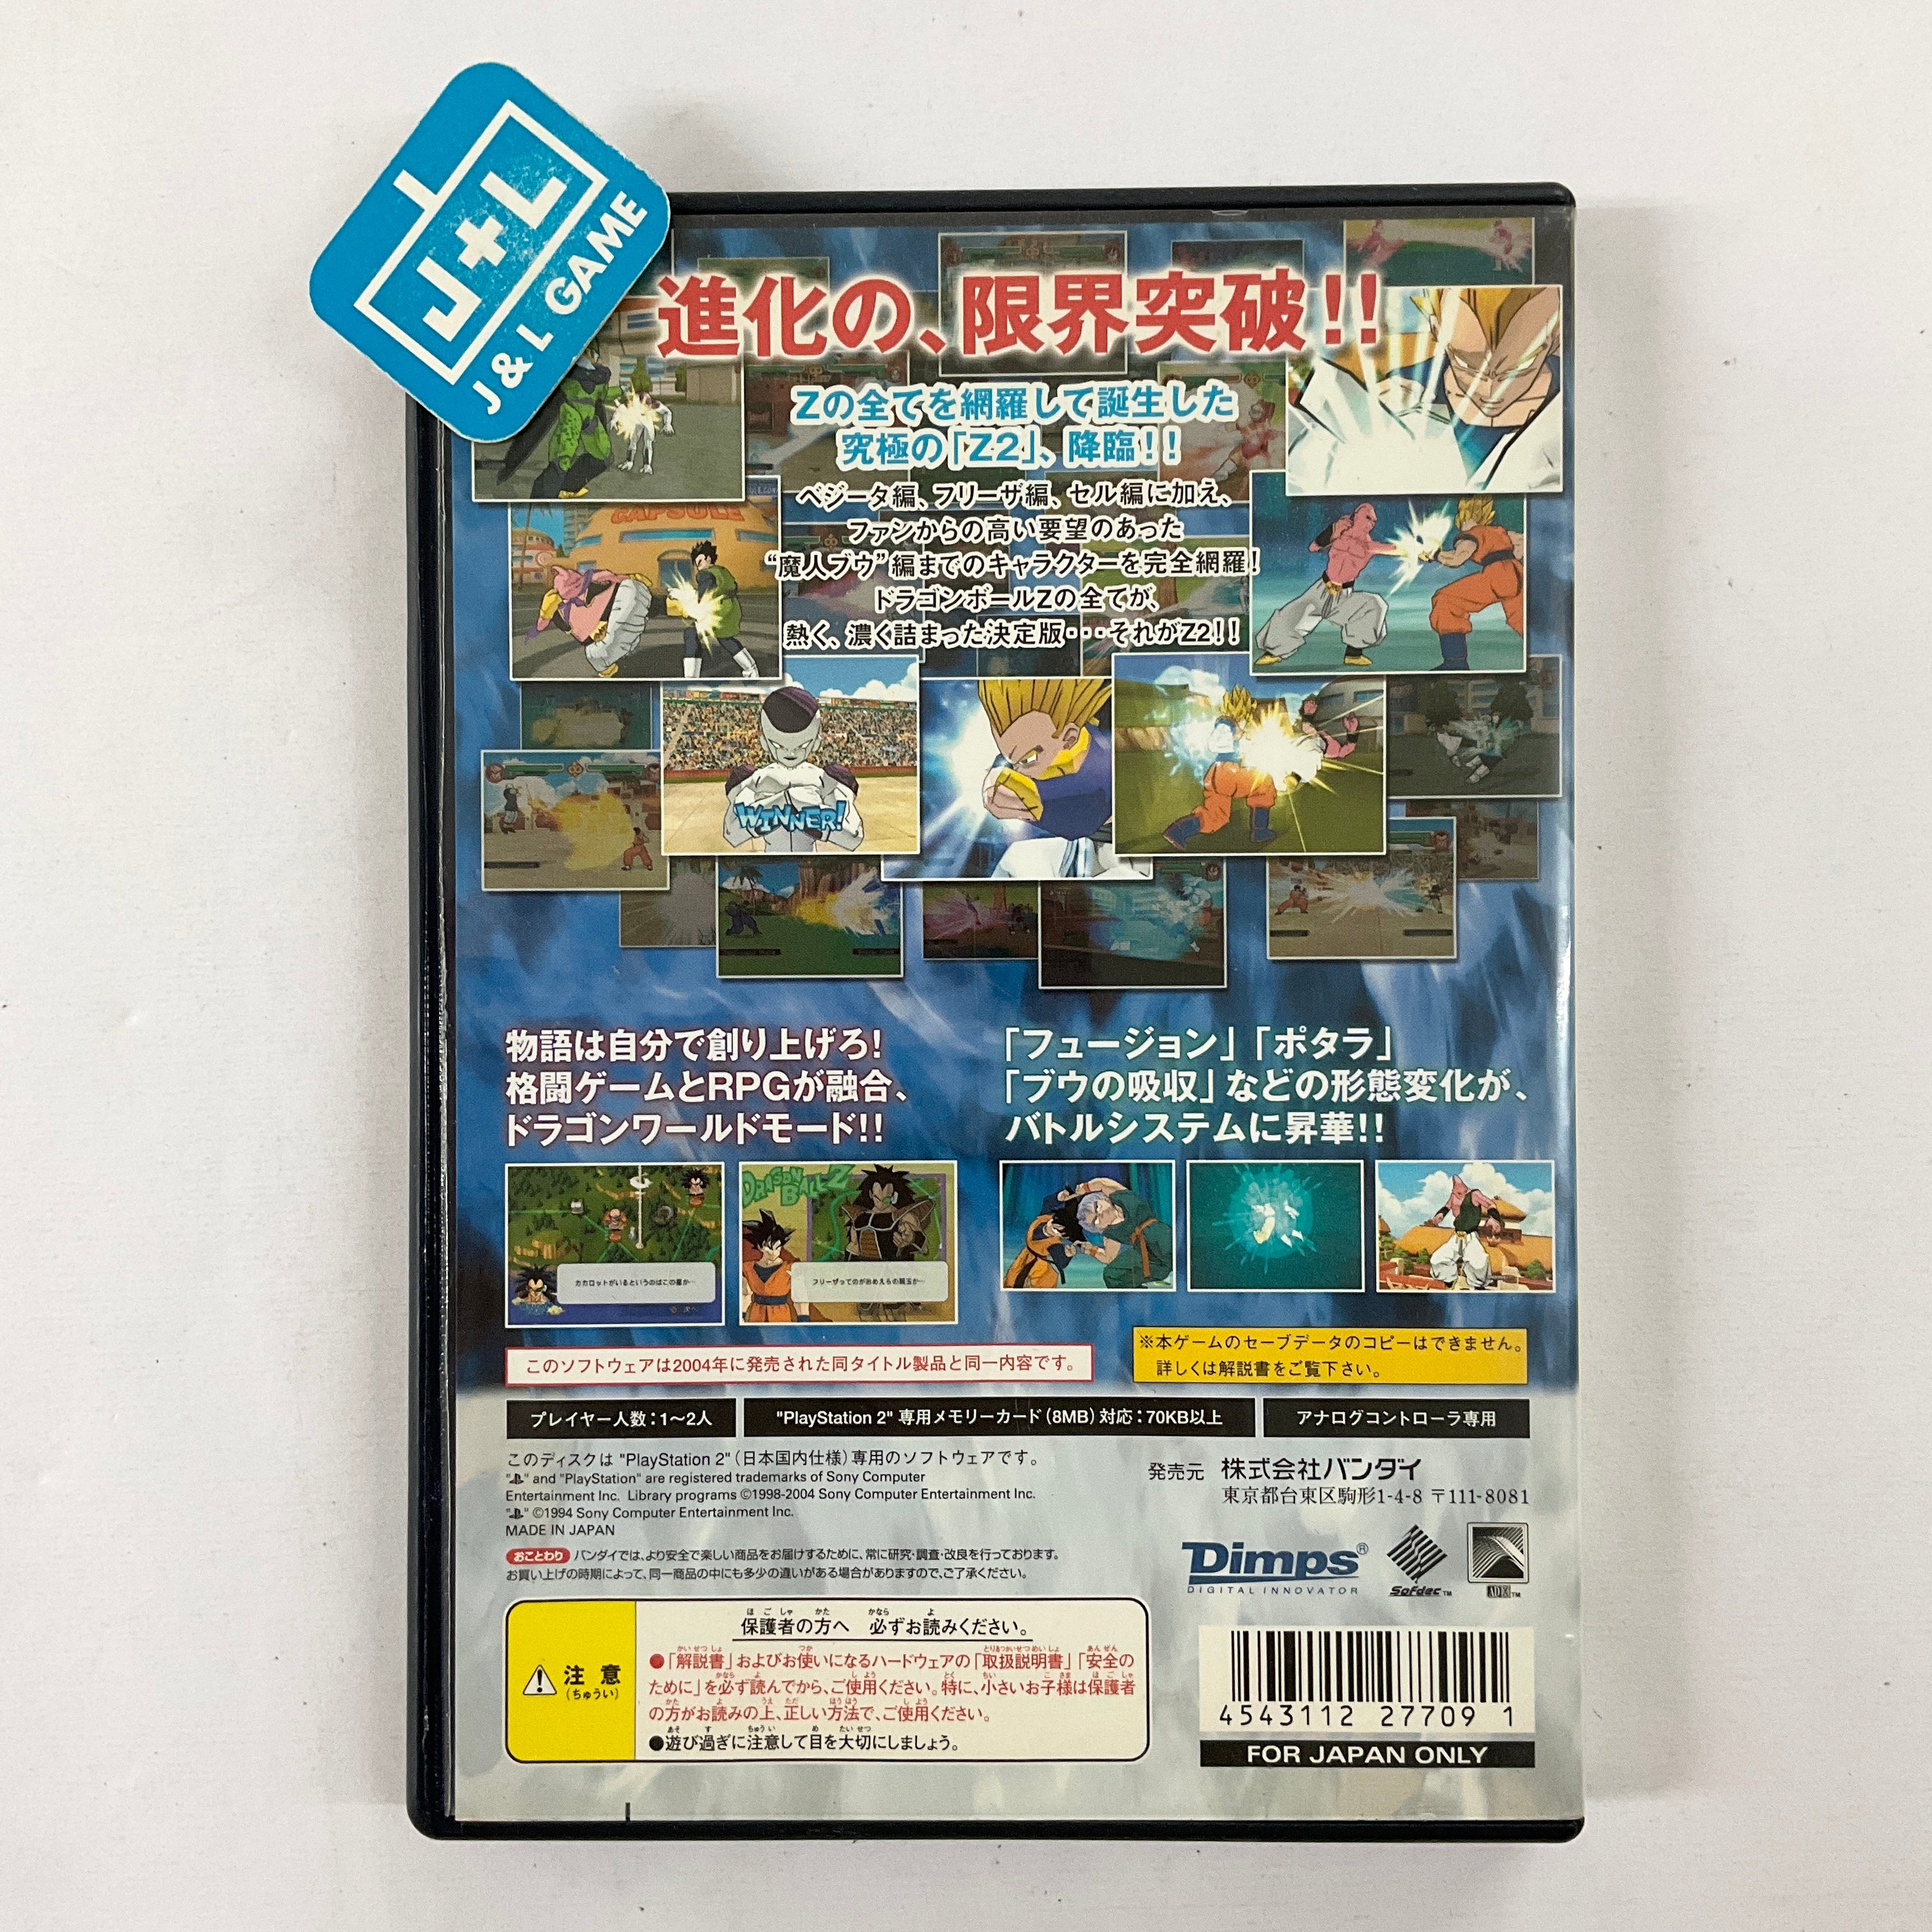 Dragon Ball Z 2 (PlayStation 2 the Best) - (PS2) PlayStation 2 [Pre-Owned] (Japanese Import) Video Games Atari SA   